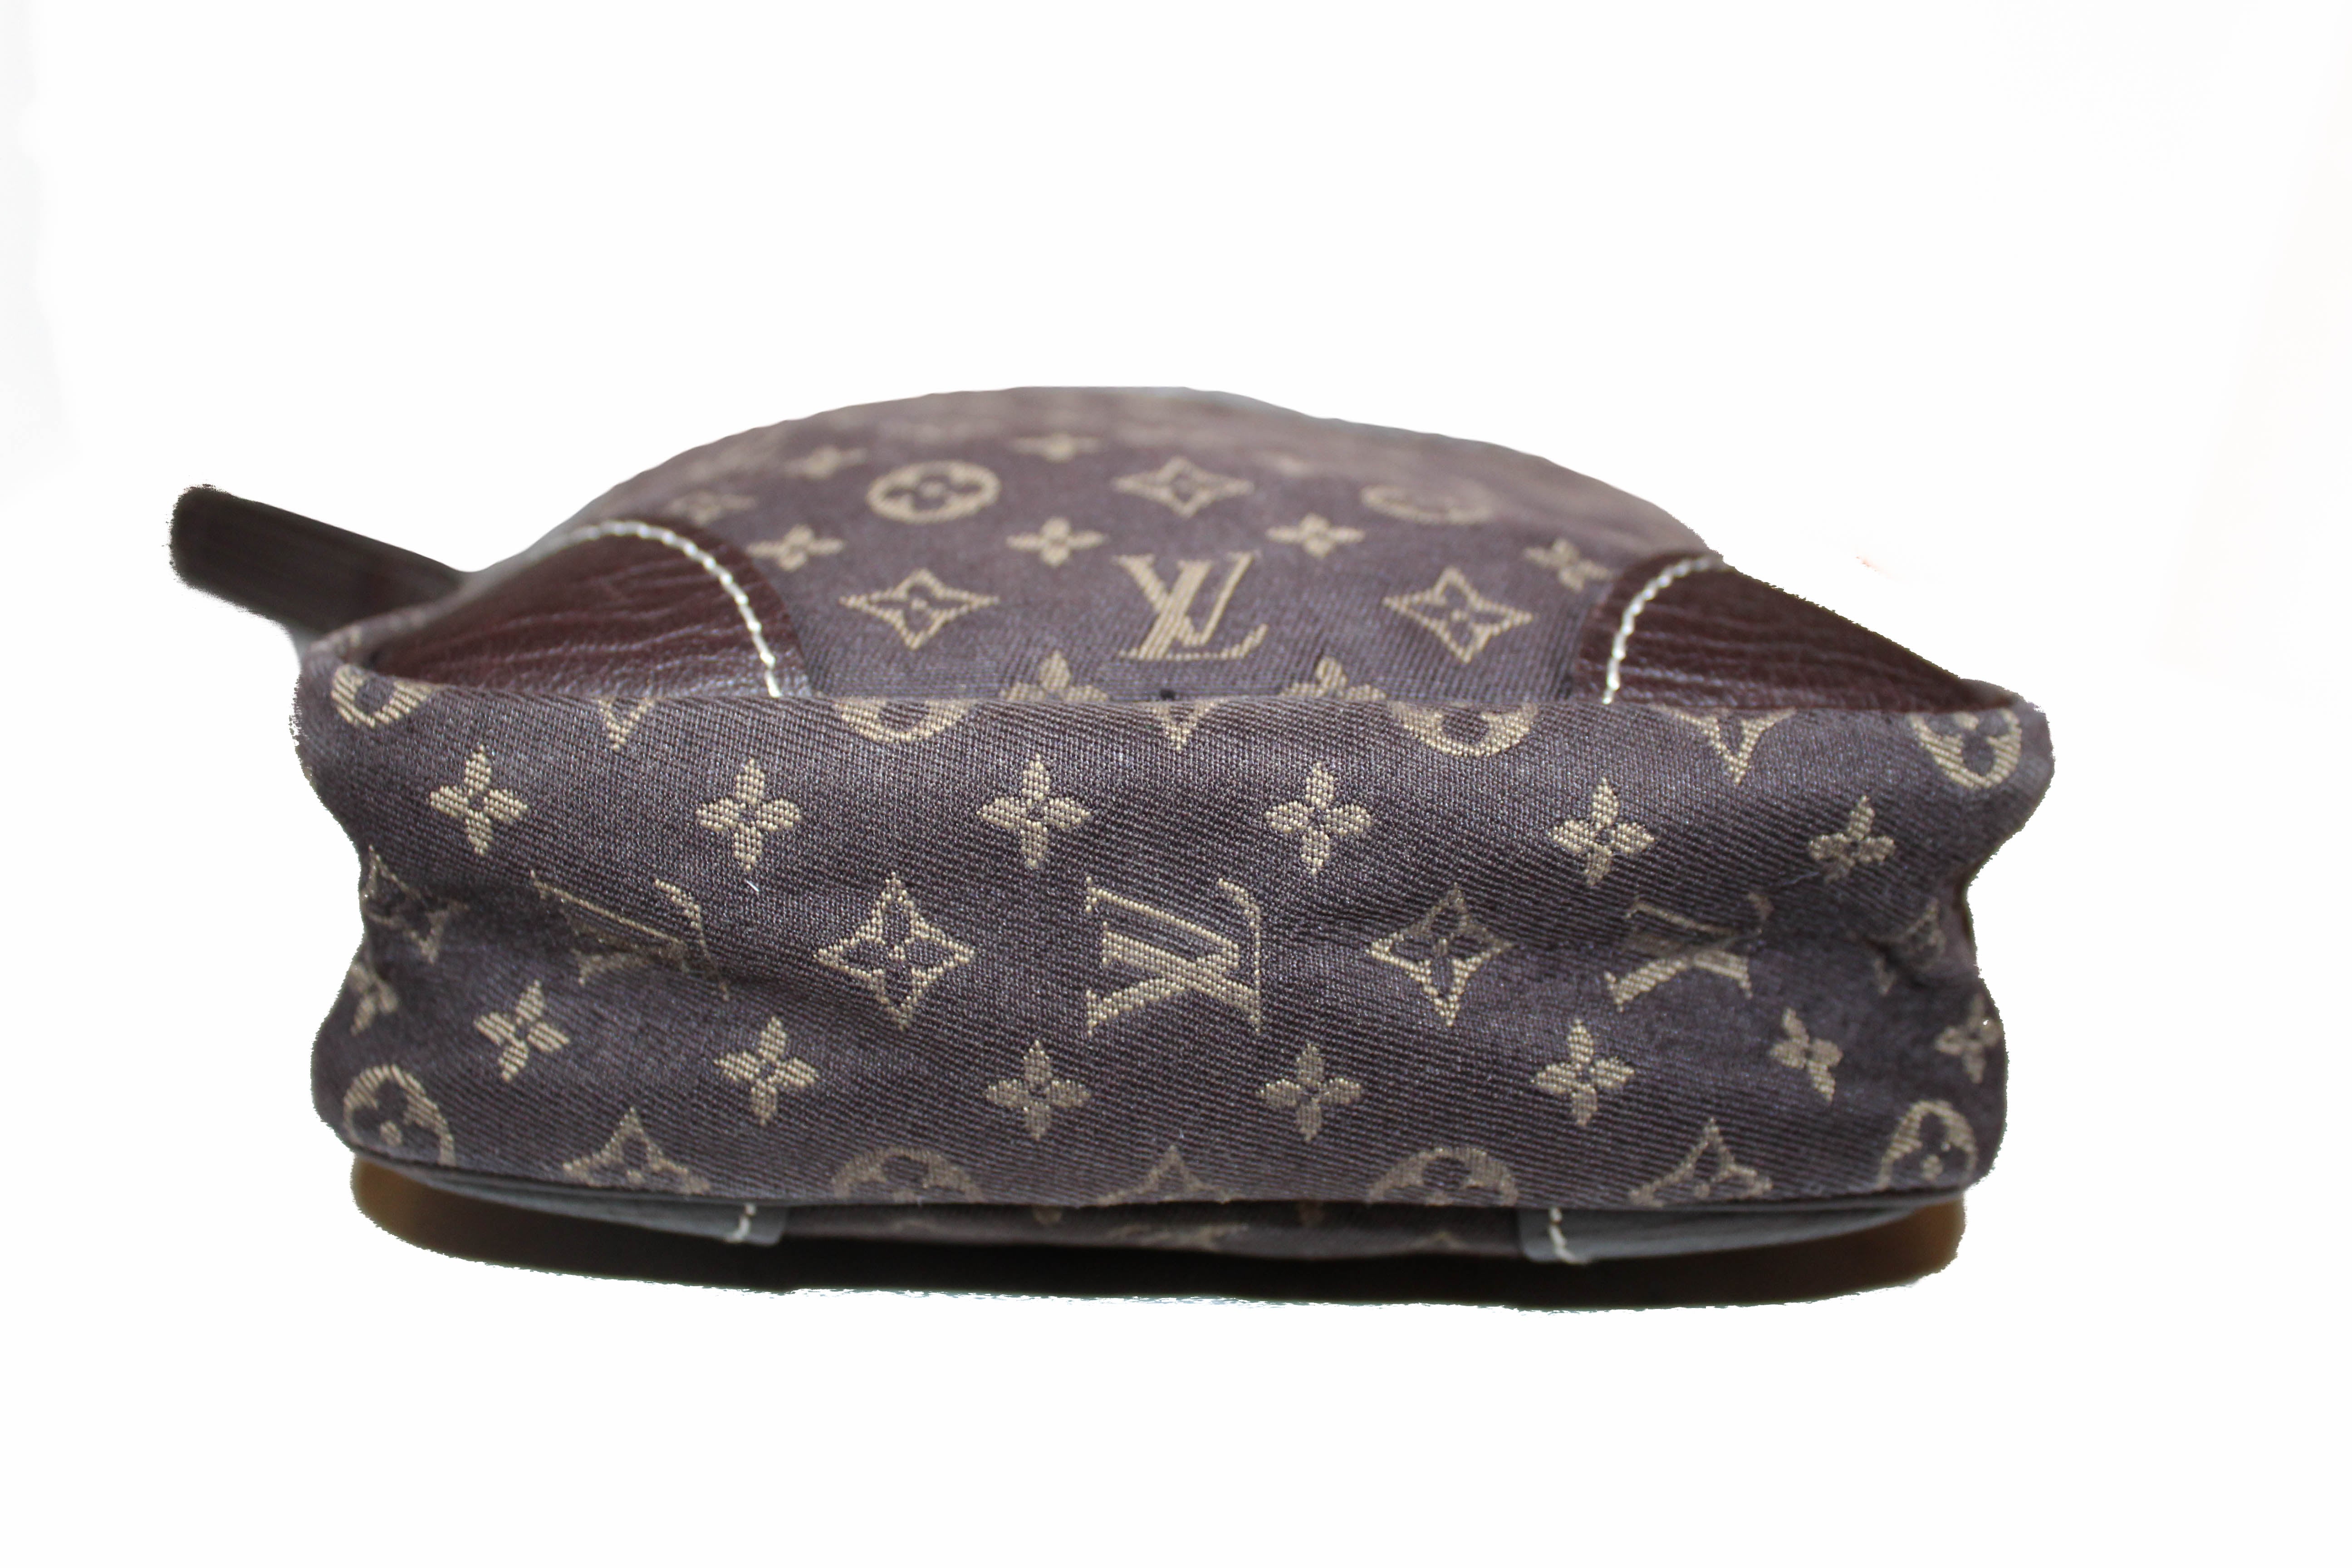 Authentic Louis Vuitton Monogram Mini Lin Brown Danube Small Messenger Bag